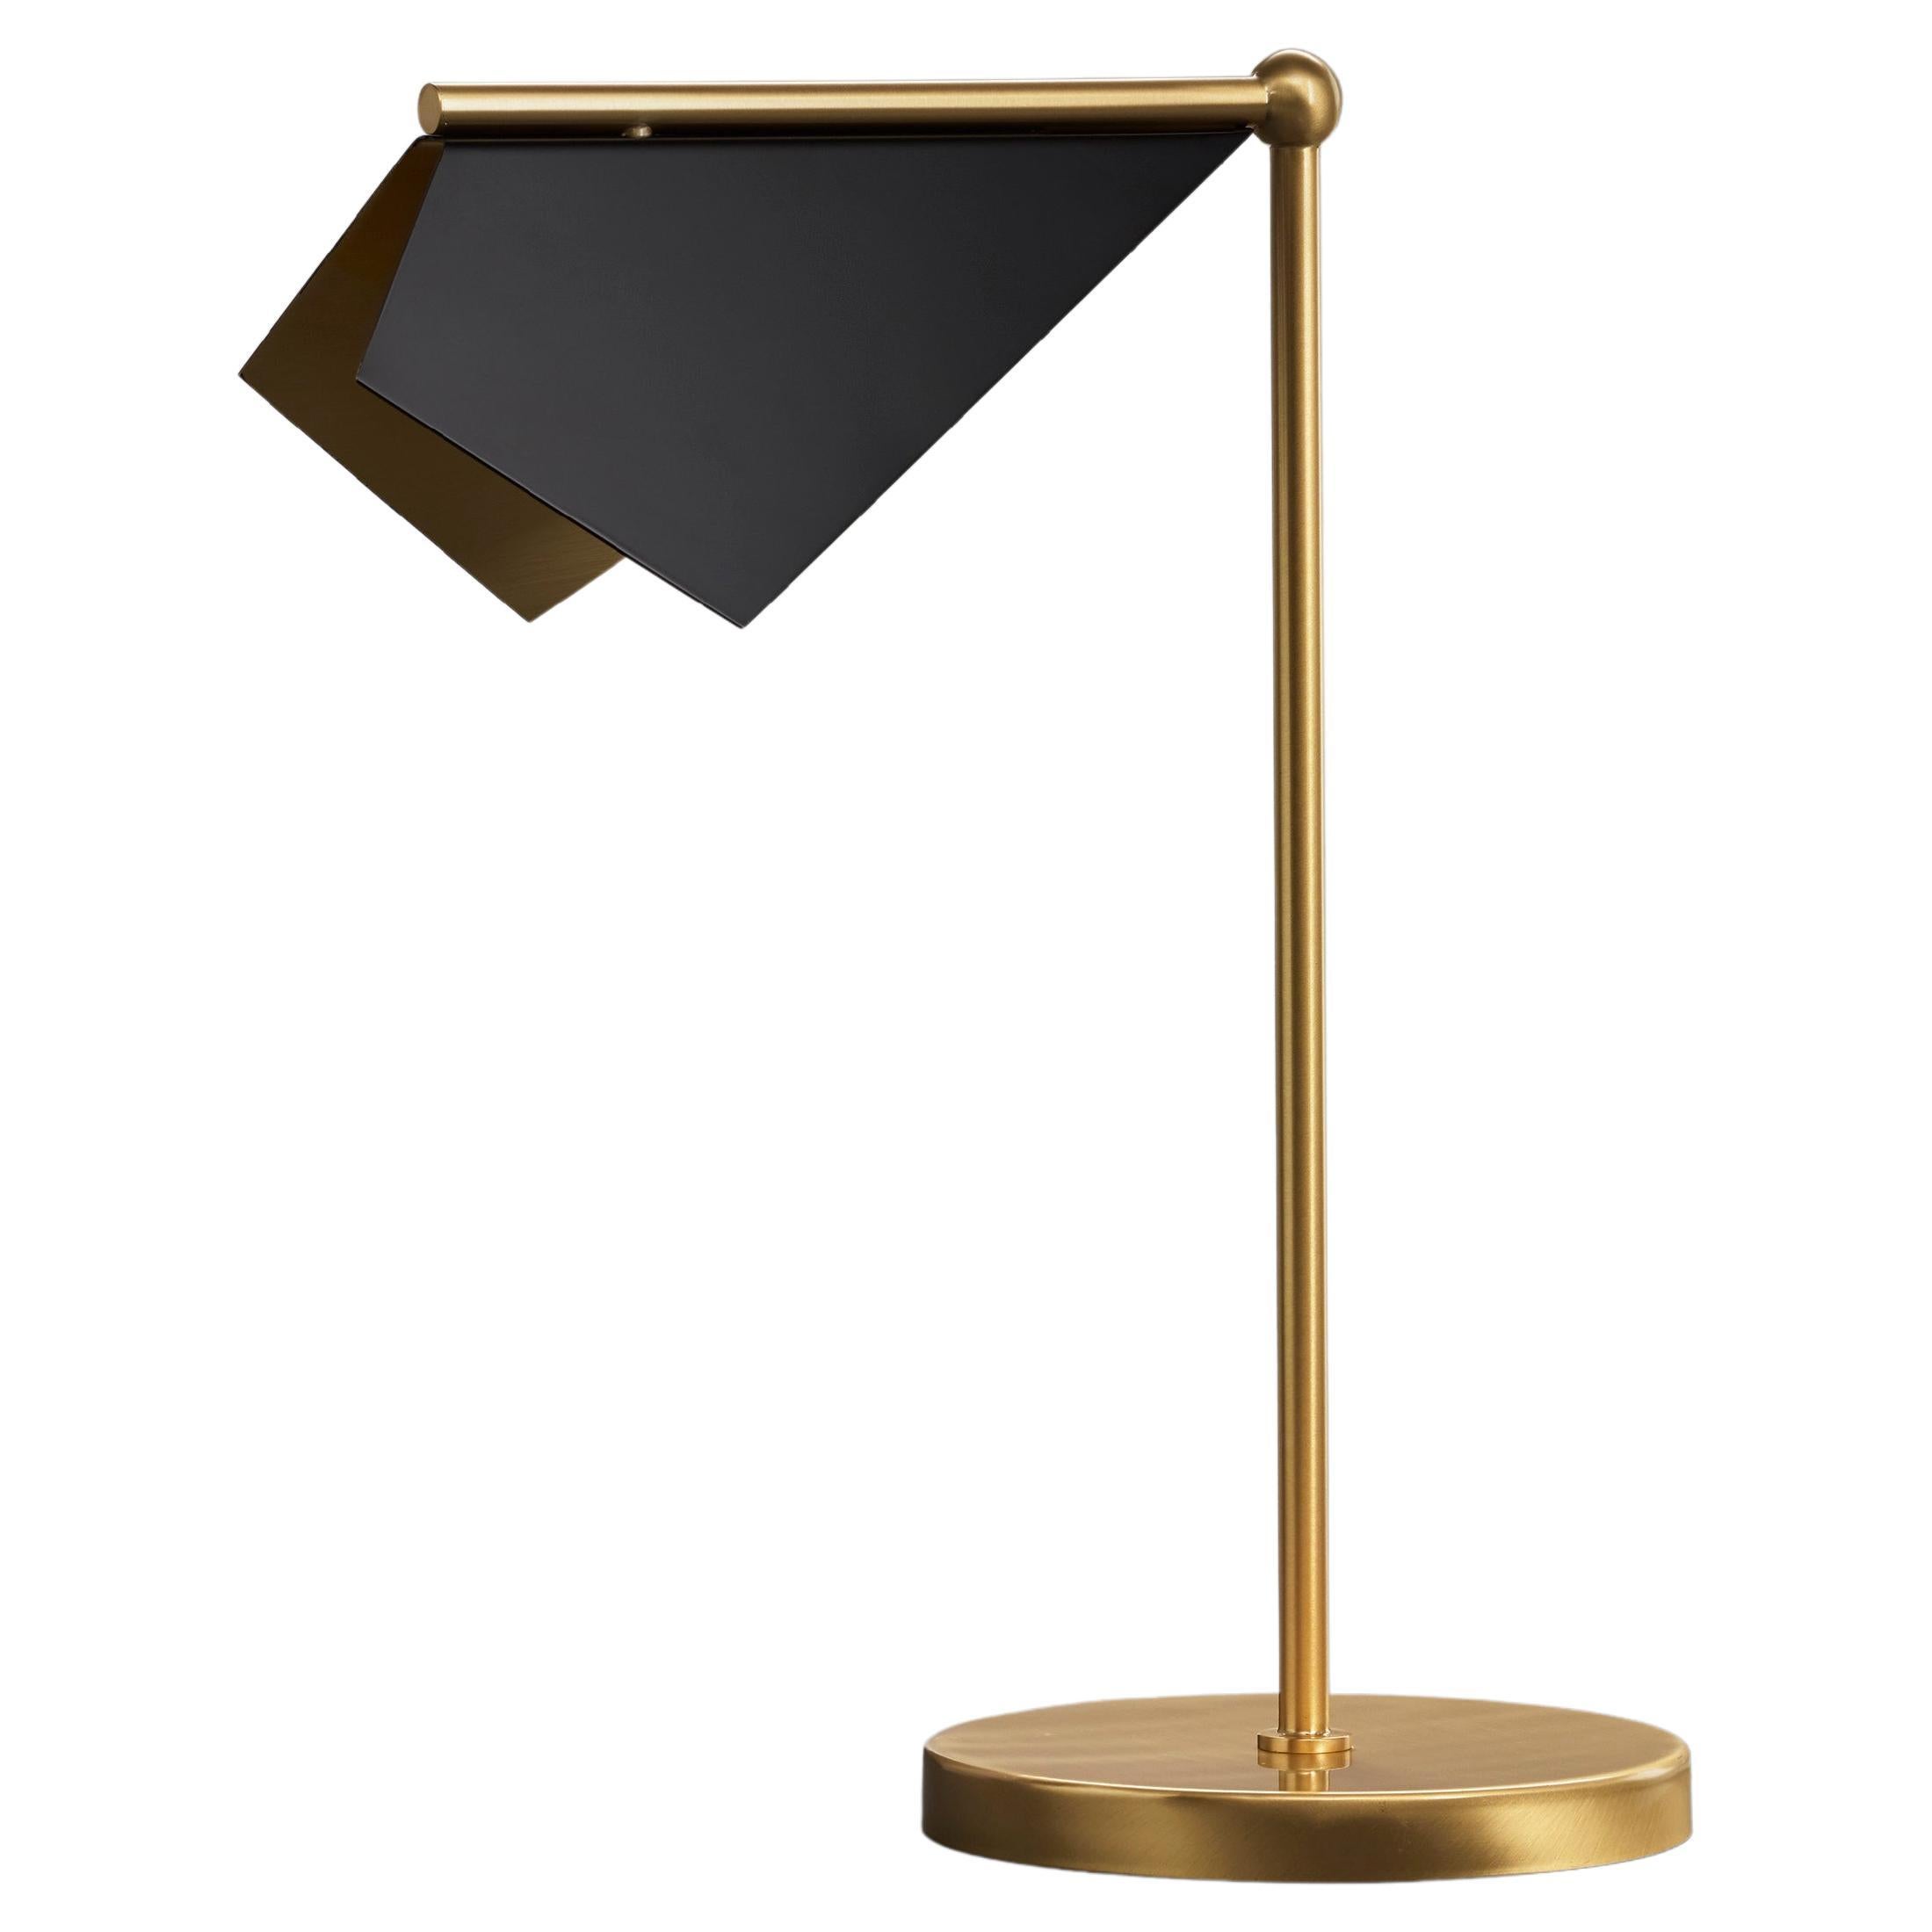 IMAGIN Vespertilio Table Lamp 1 in Matt Black and Brushed Brass For Sale